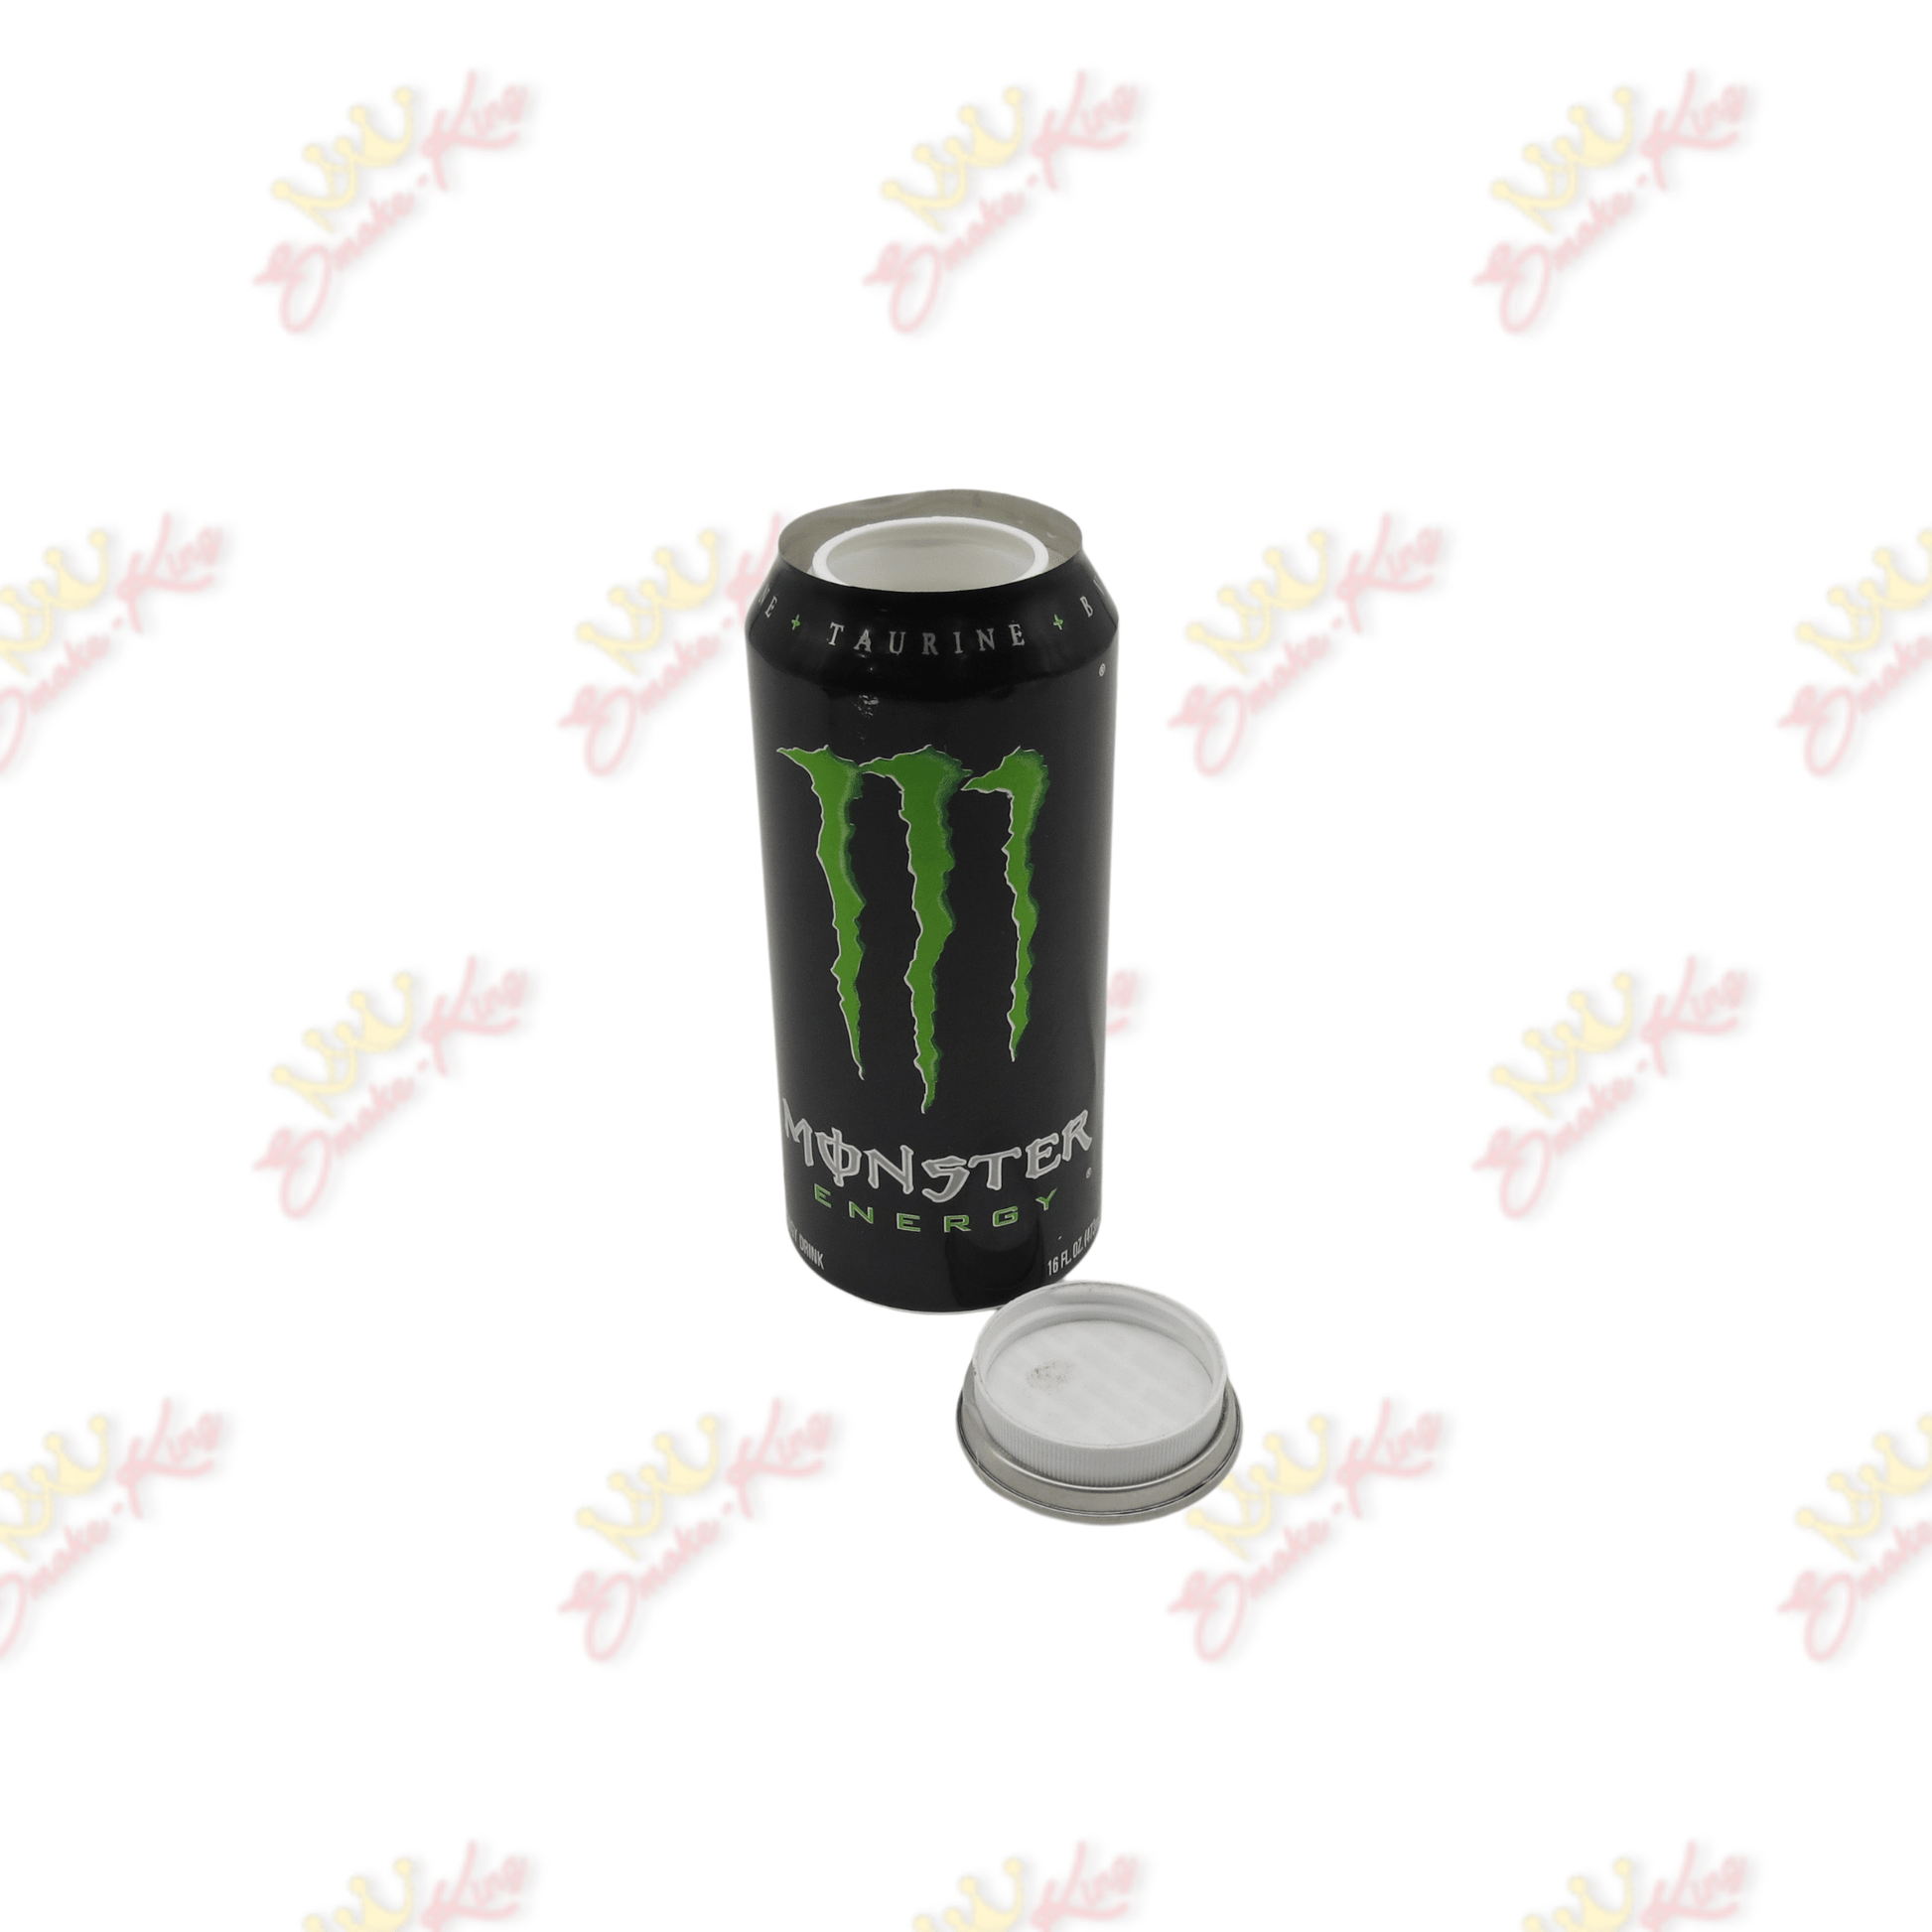 Smoke-king secret stash cans Monster secret stash can